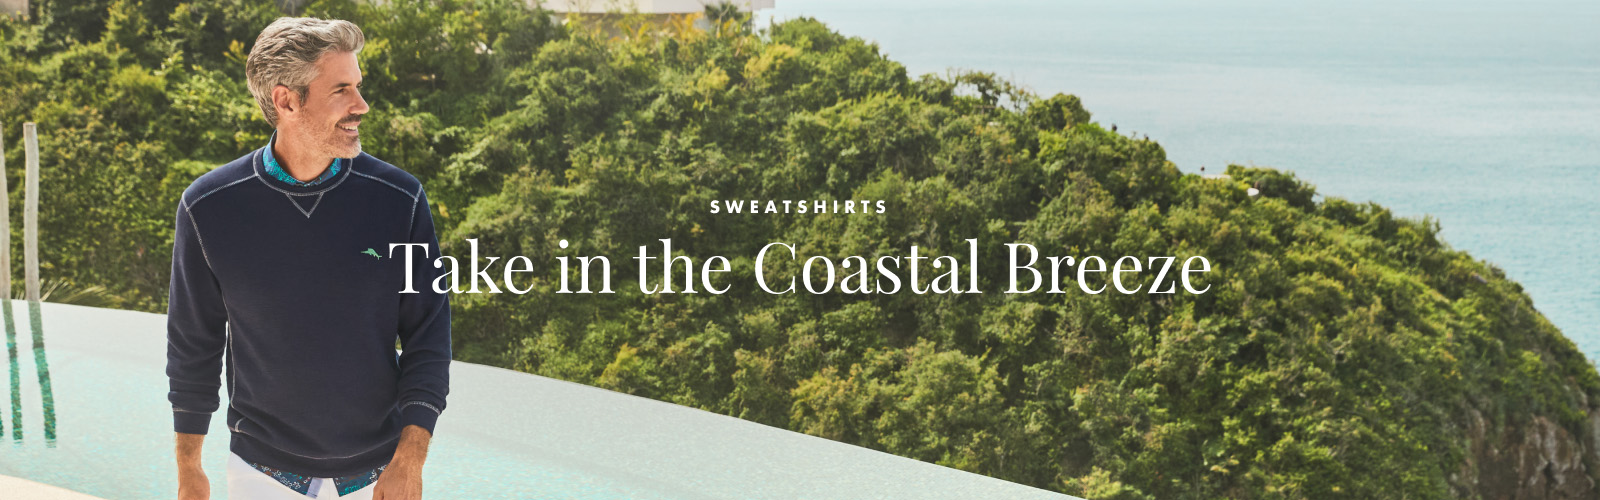 Sweatshirts - Take in the Coastal Breeze